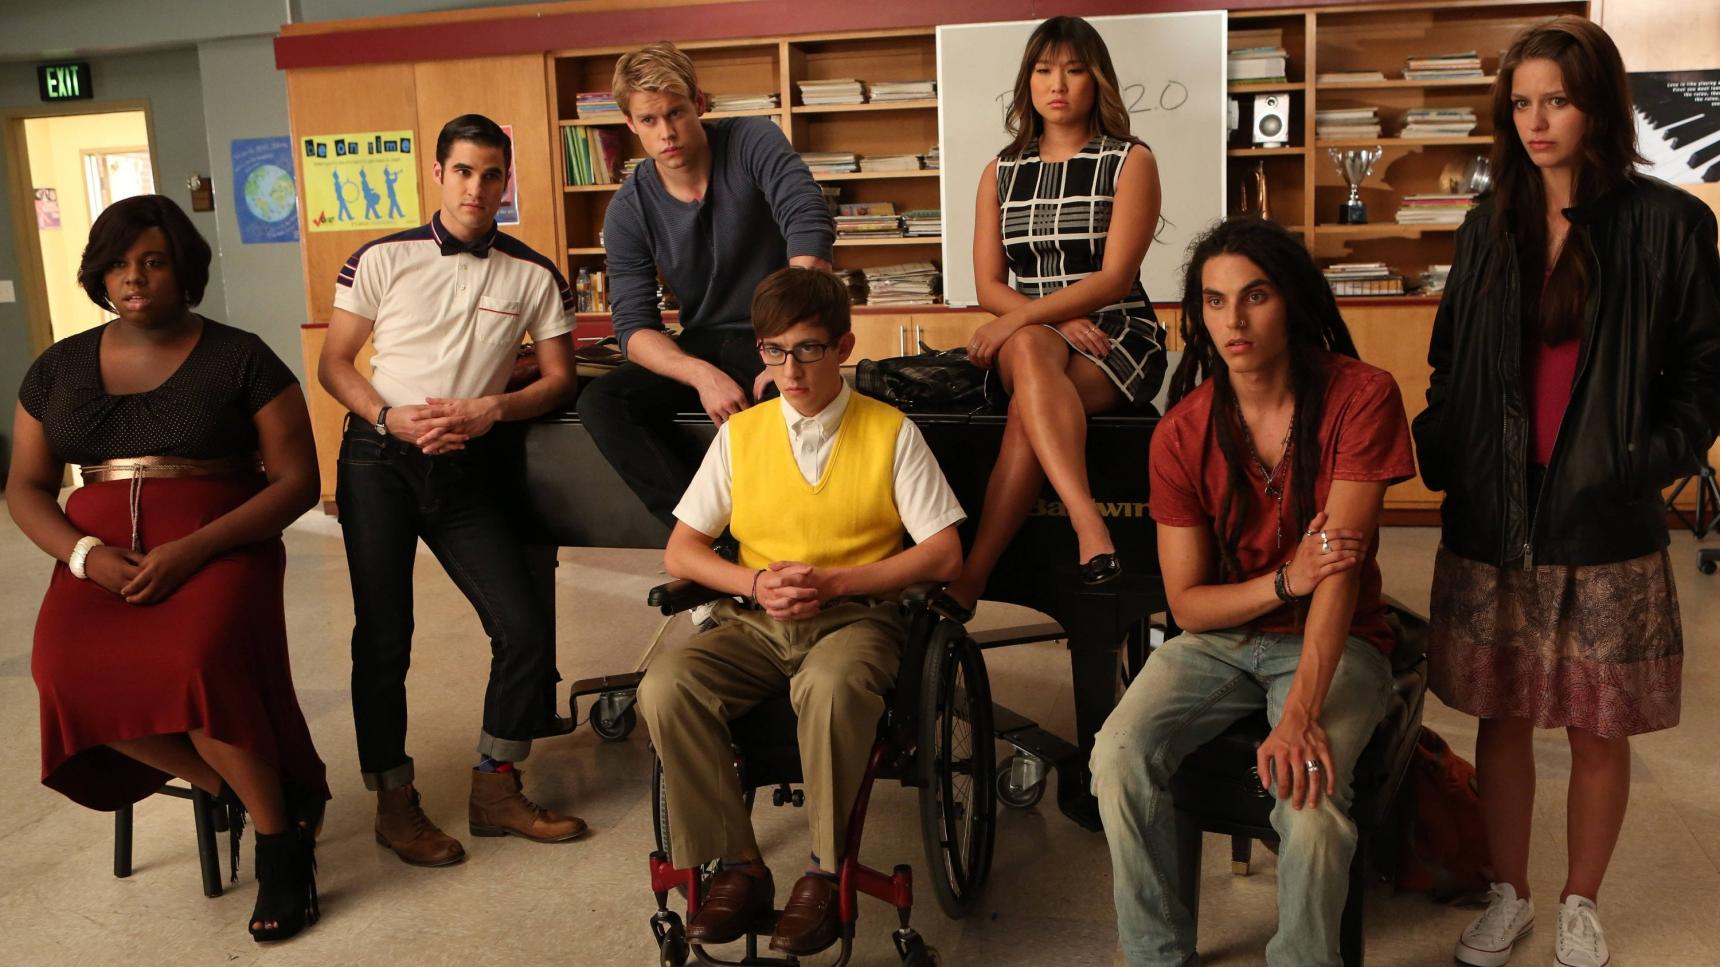 Poster del episodio 2 de Glee online